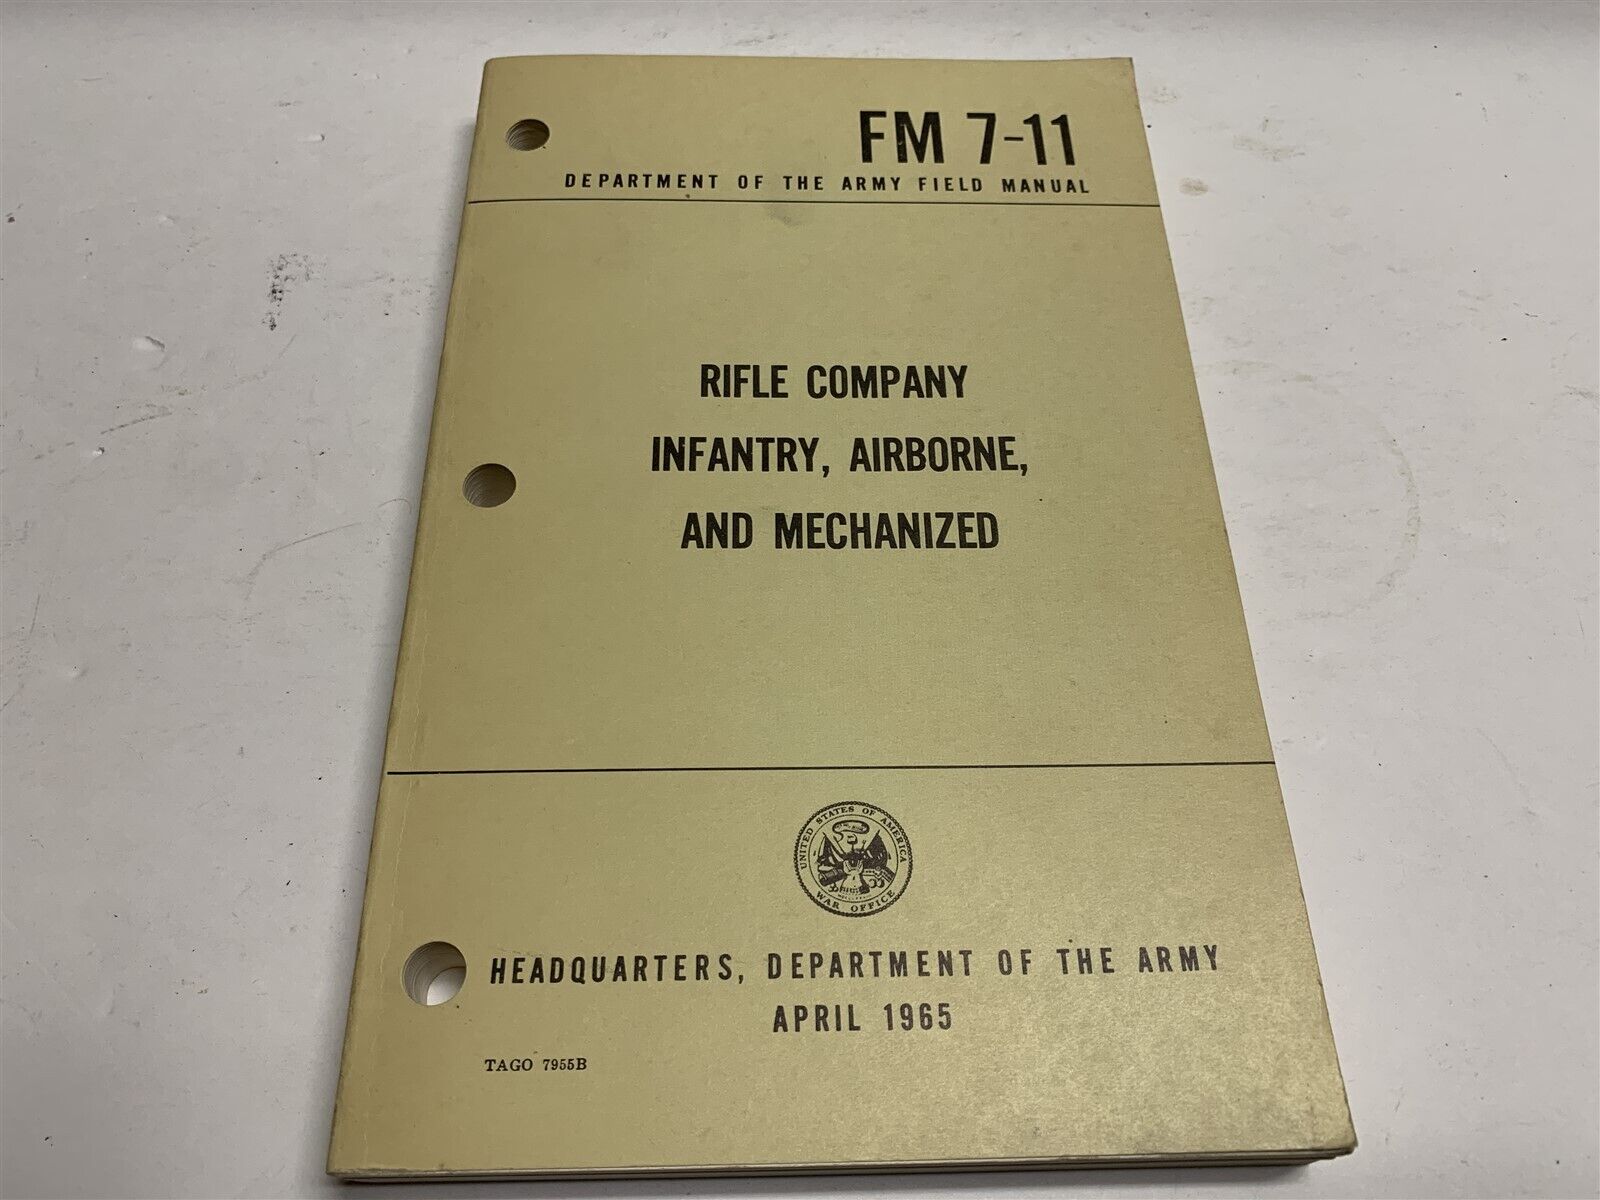 1965 Army Field Manual Rifle Company Infantry Airborne Mechanized FM 7-11